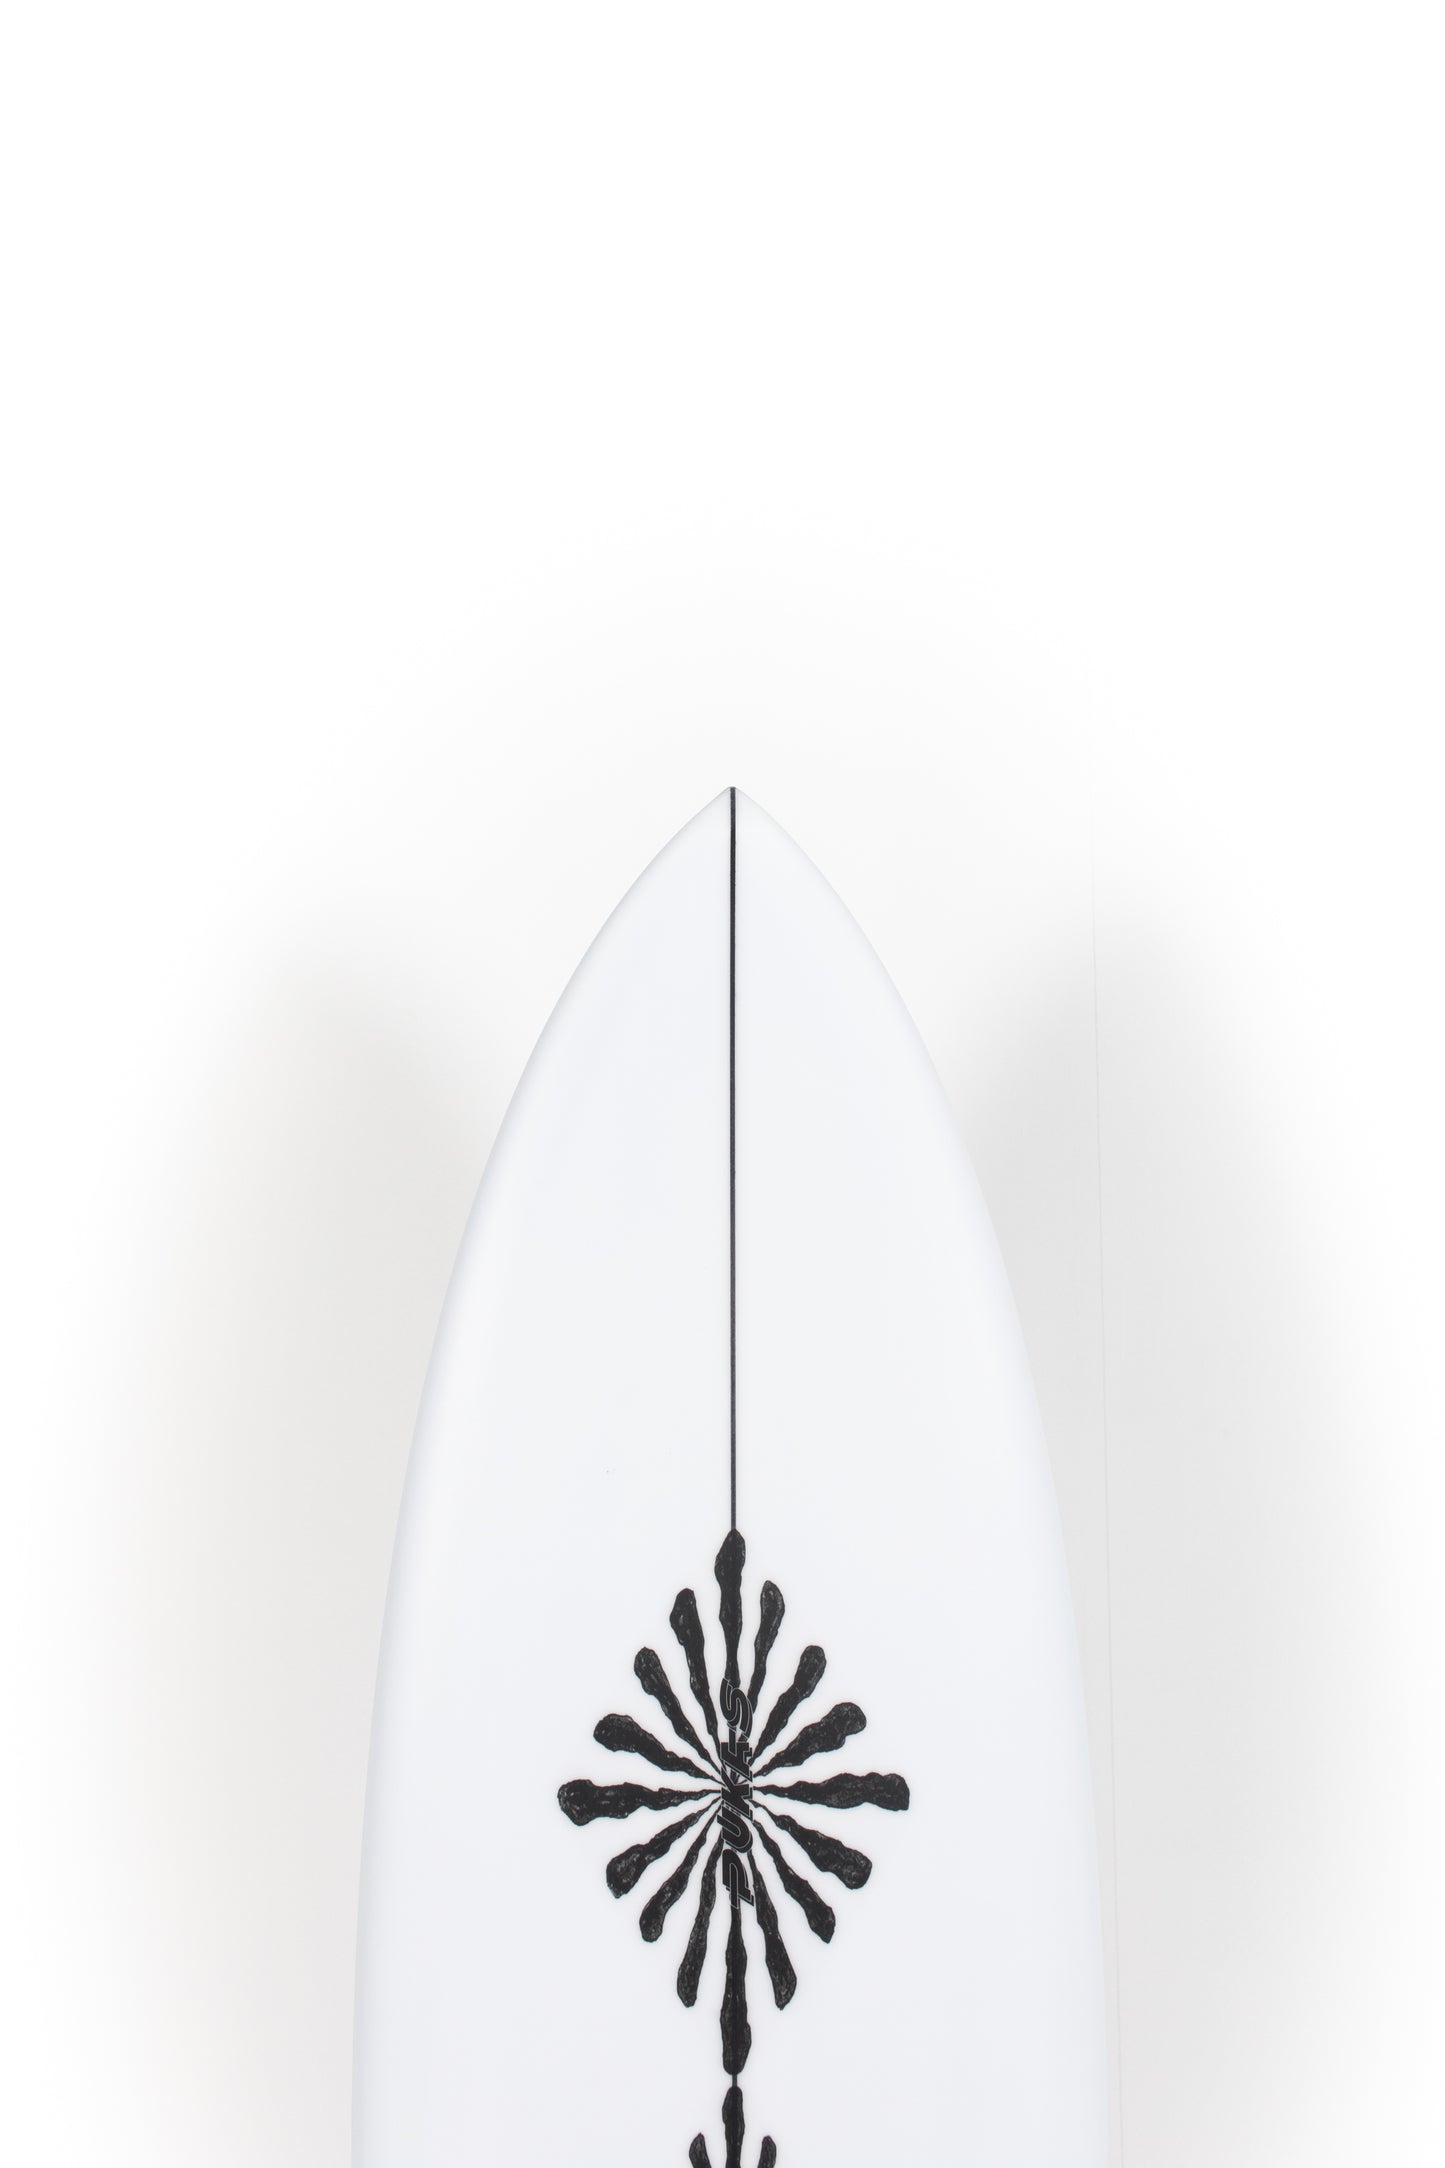 
                  
                    Pukas Surf shop - Pukas Surfboards - ACID PLAN by Axel Lorentz -  5'8" x 19,75 x 2,40 x 29,46L - AX08520
                  
                